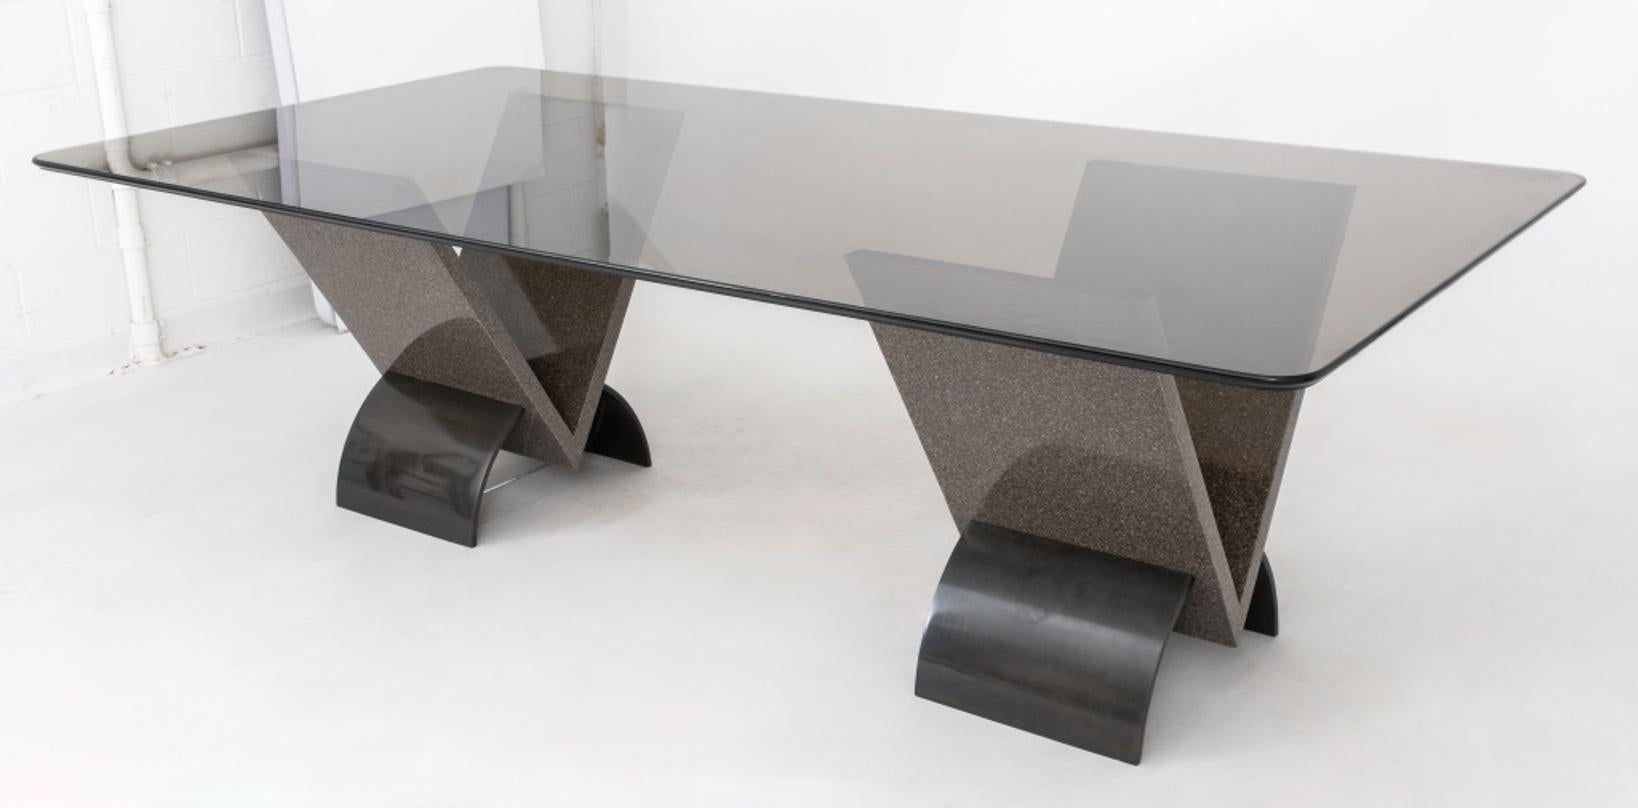 20th Century Postmodern Glass, Granite, & Steel Dining Table